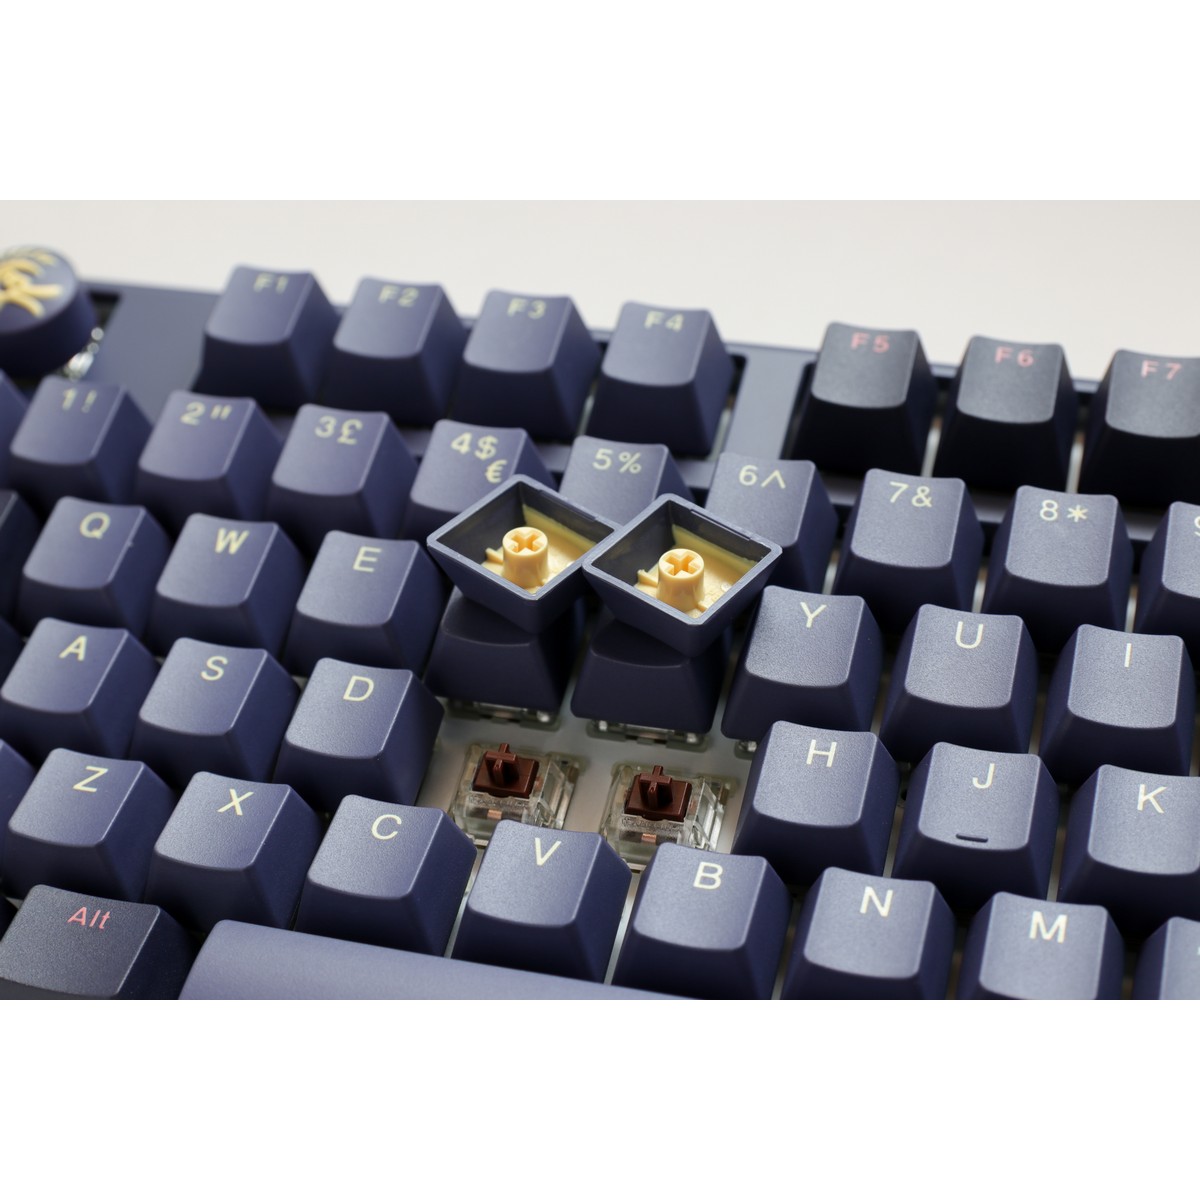 Ducky - Ducky One 3 Cosmic TKL 80% USB RGB Mechanical Gaming Keyboard Cherry MX Speed Silver Switch - UK Layout